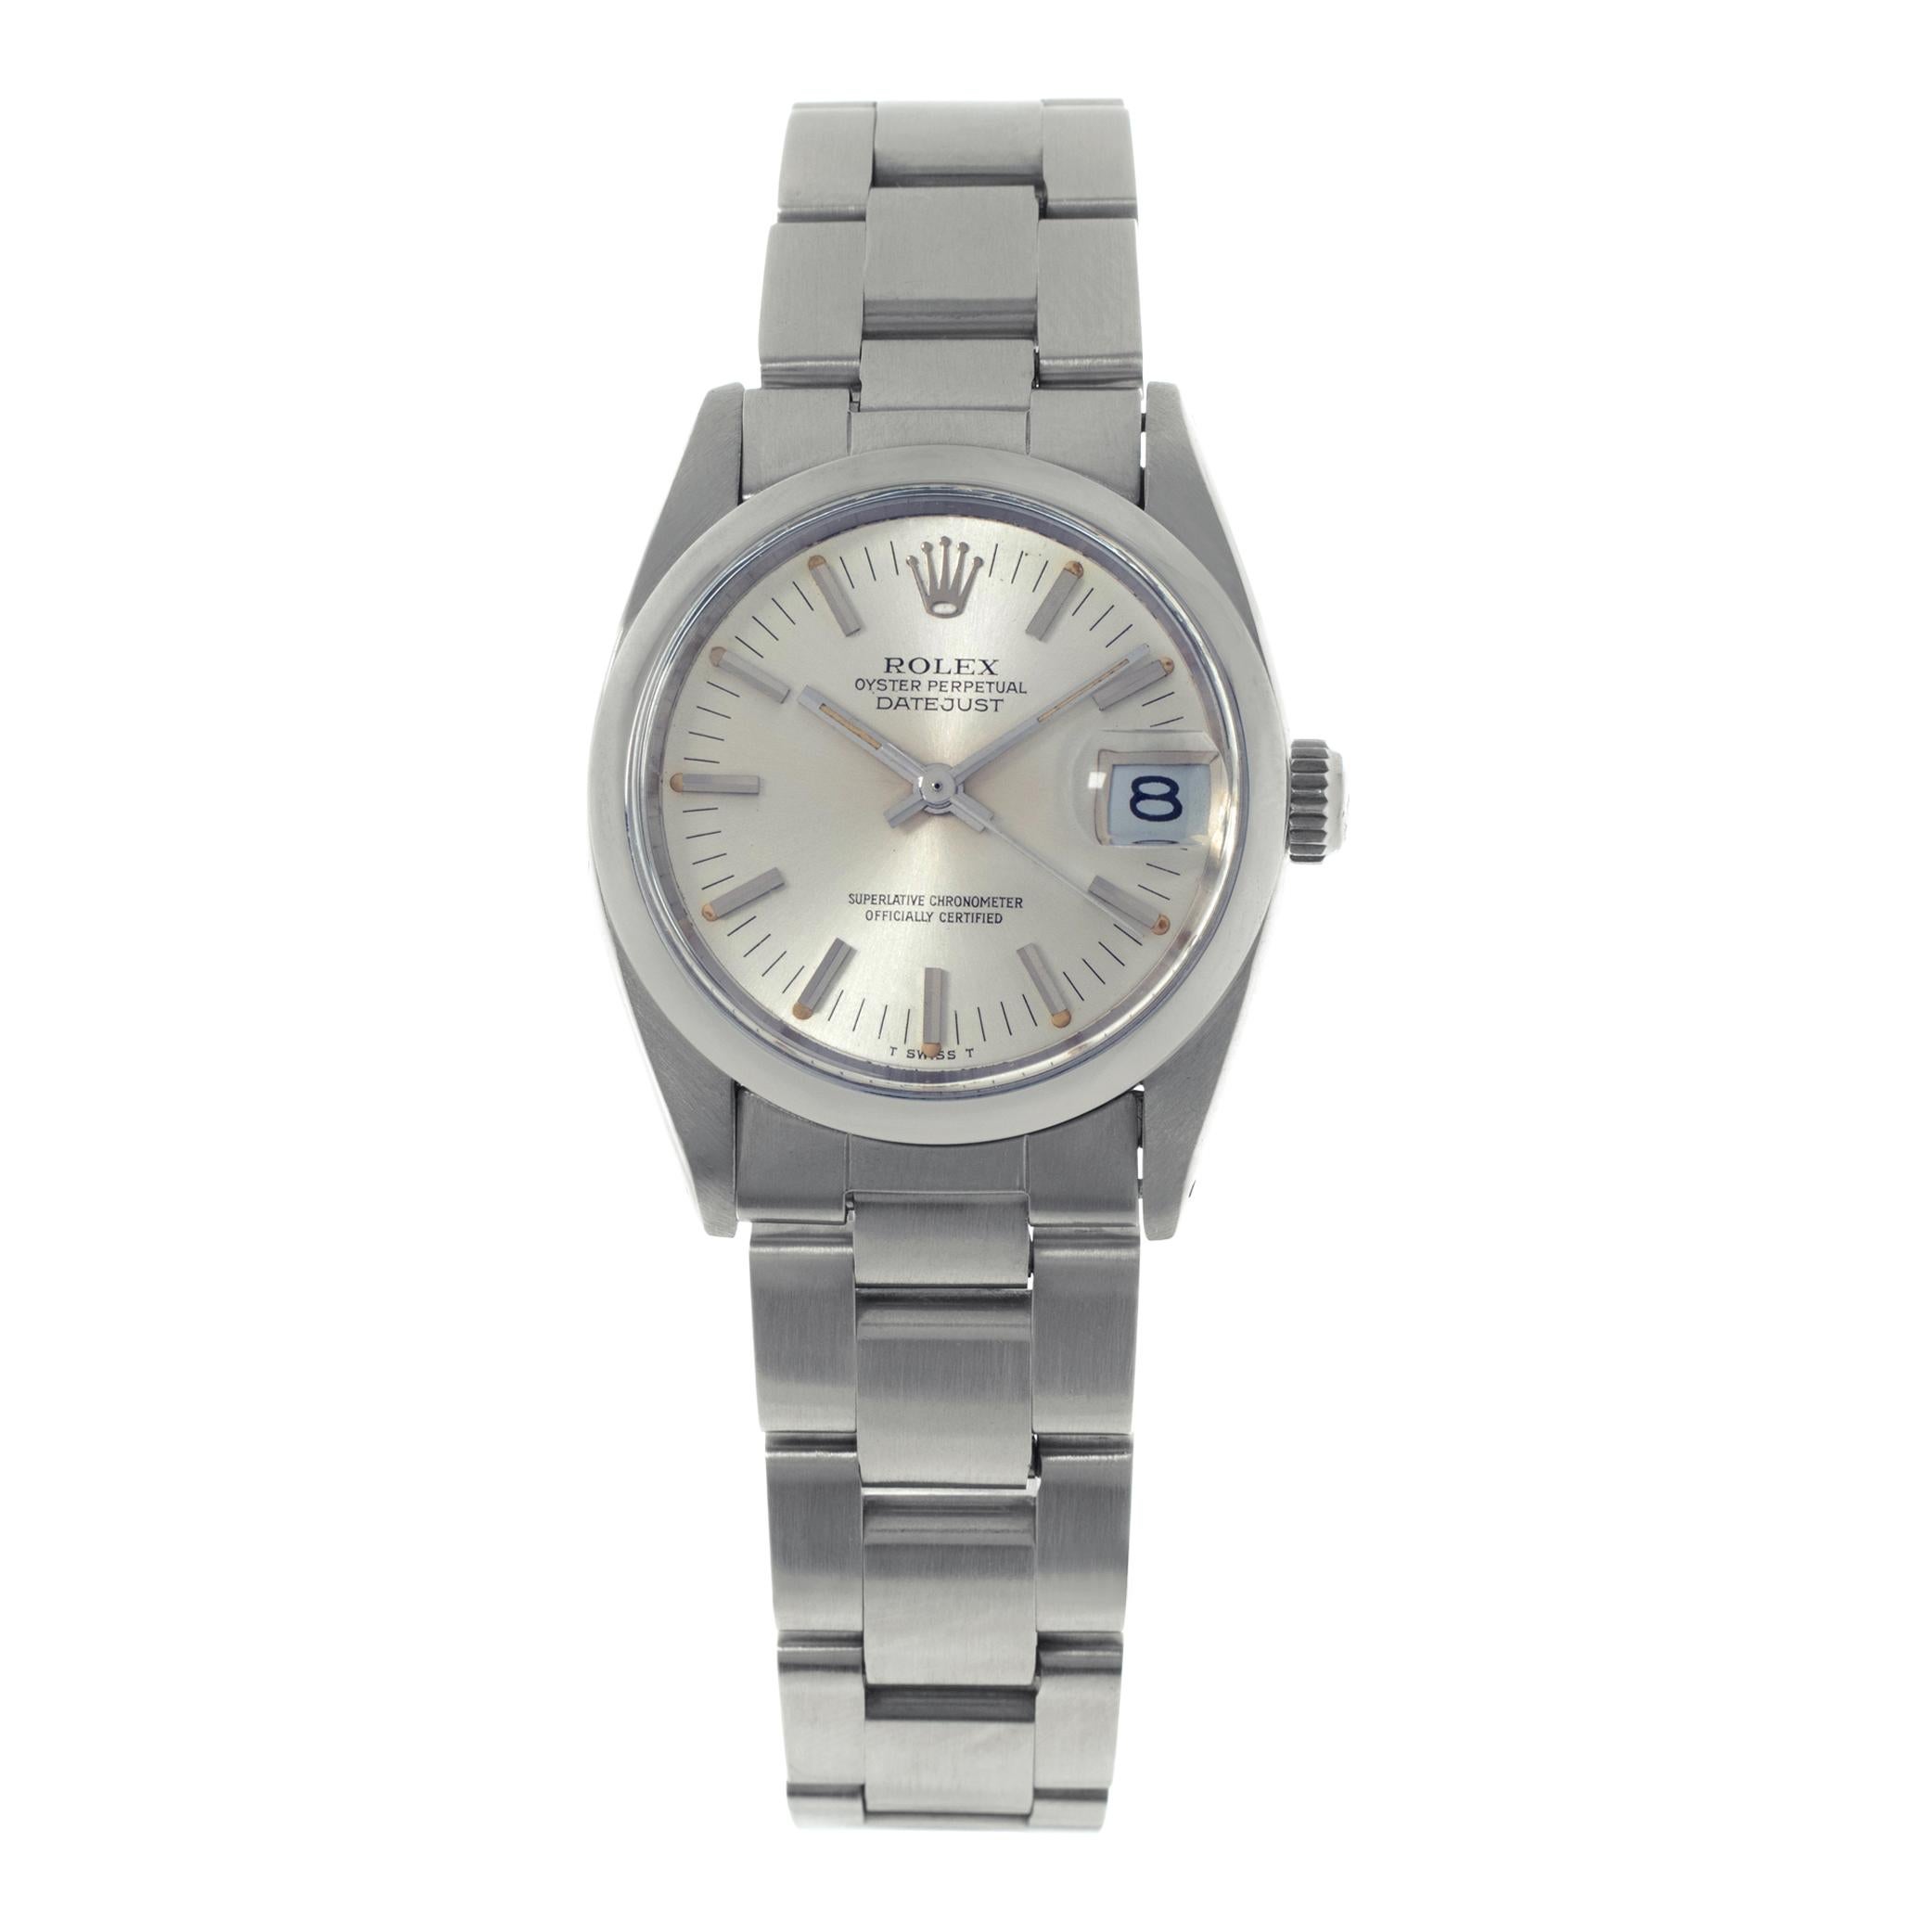 Rolex Datejust stainless steel Automatic Wristwatch Ref 68240